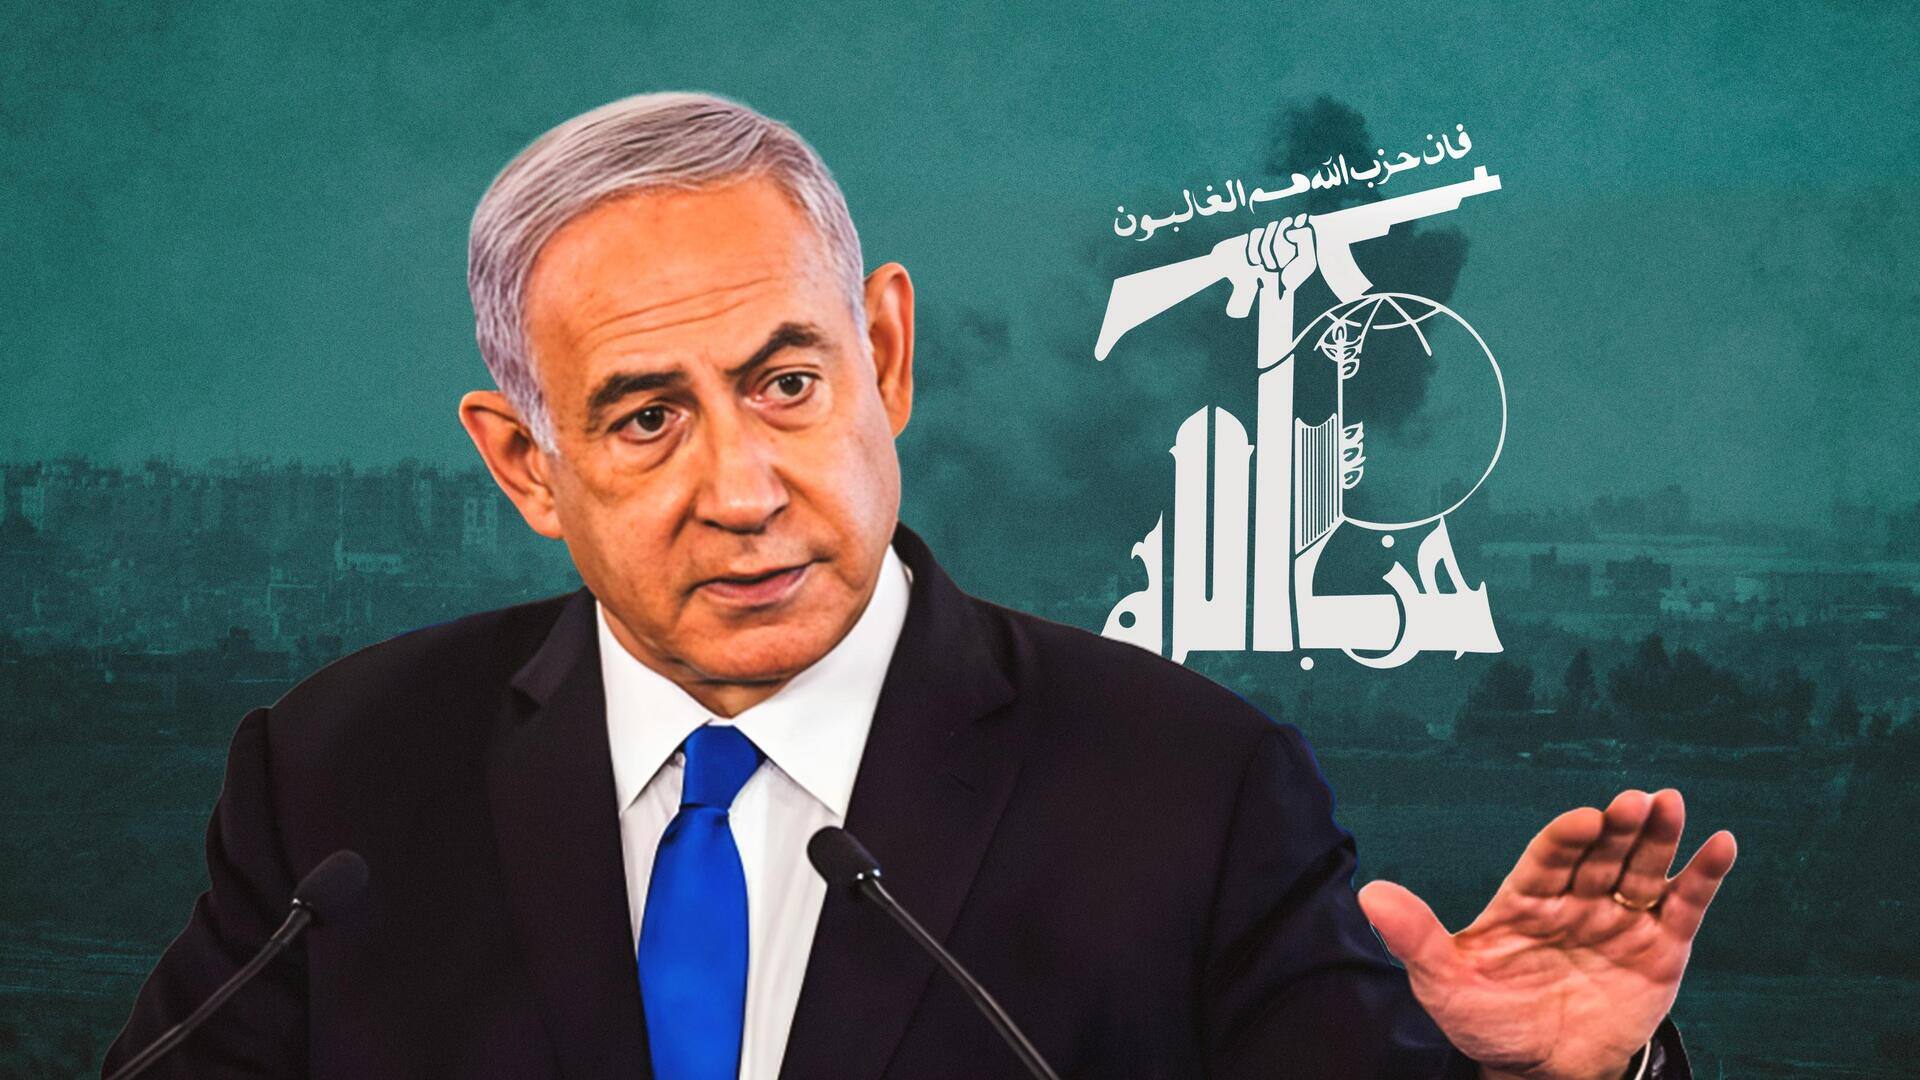 'Terrorists' attacked Gaza hospital, not IDF, says Netanyahu; Palestine reacts